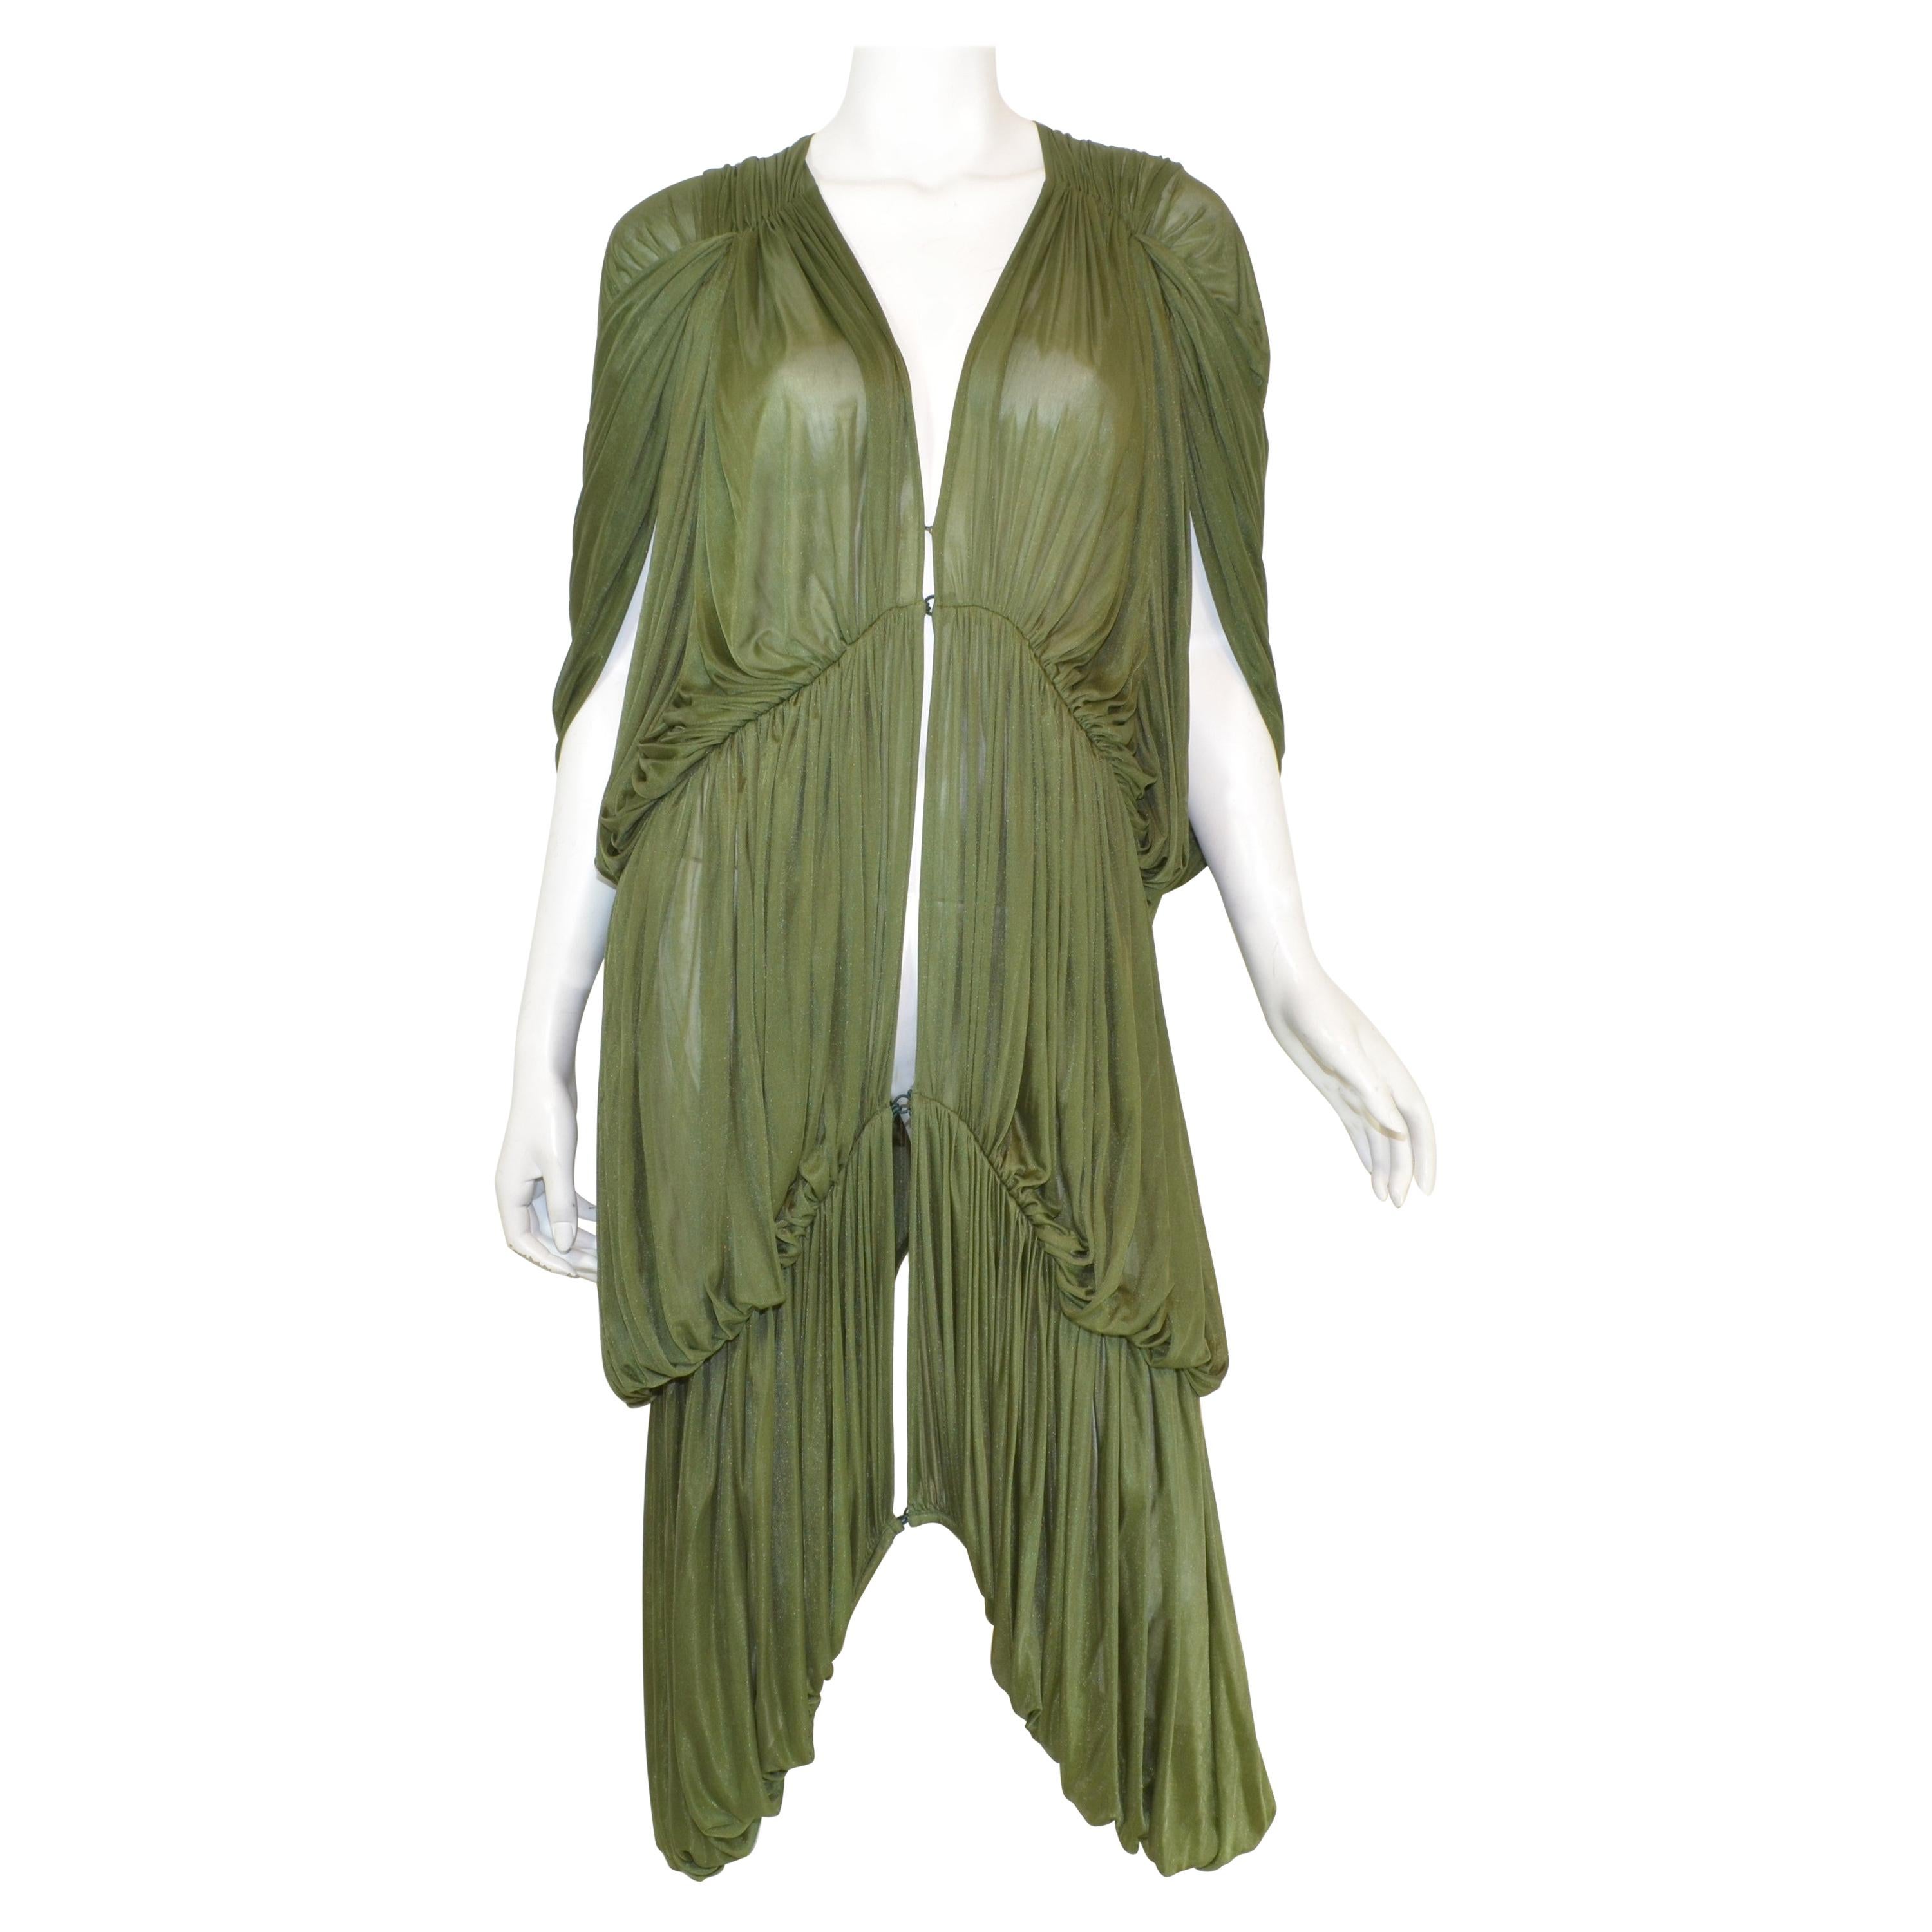 Norma Kamali OMO Olive Green Draped Dress